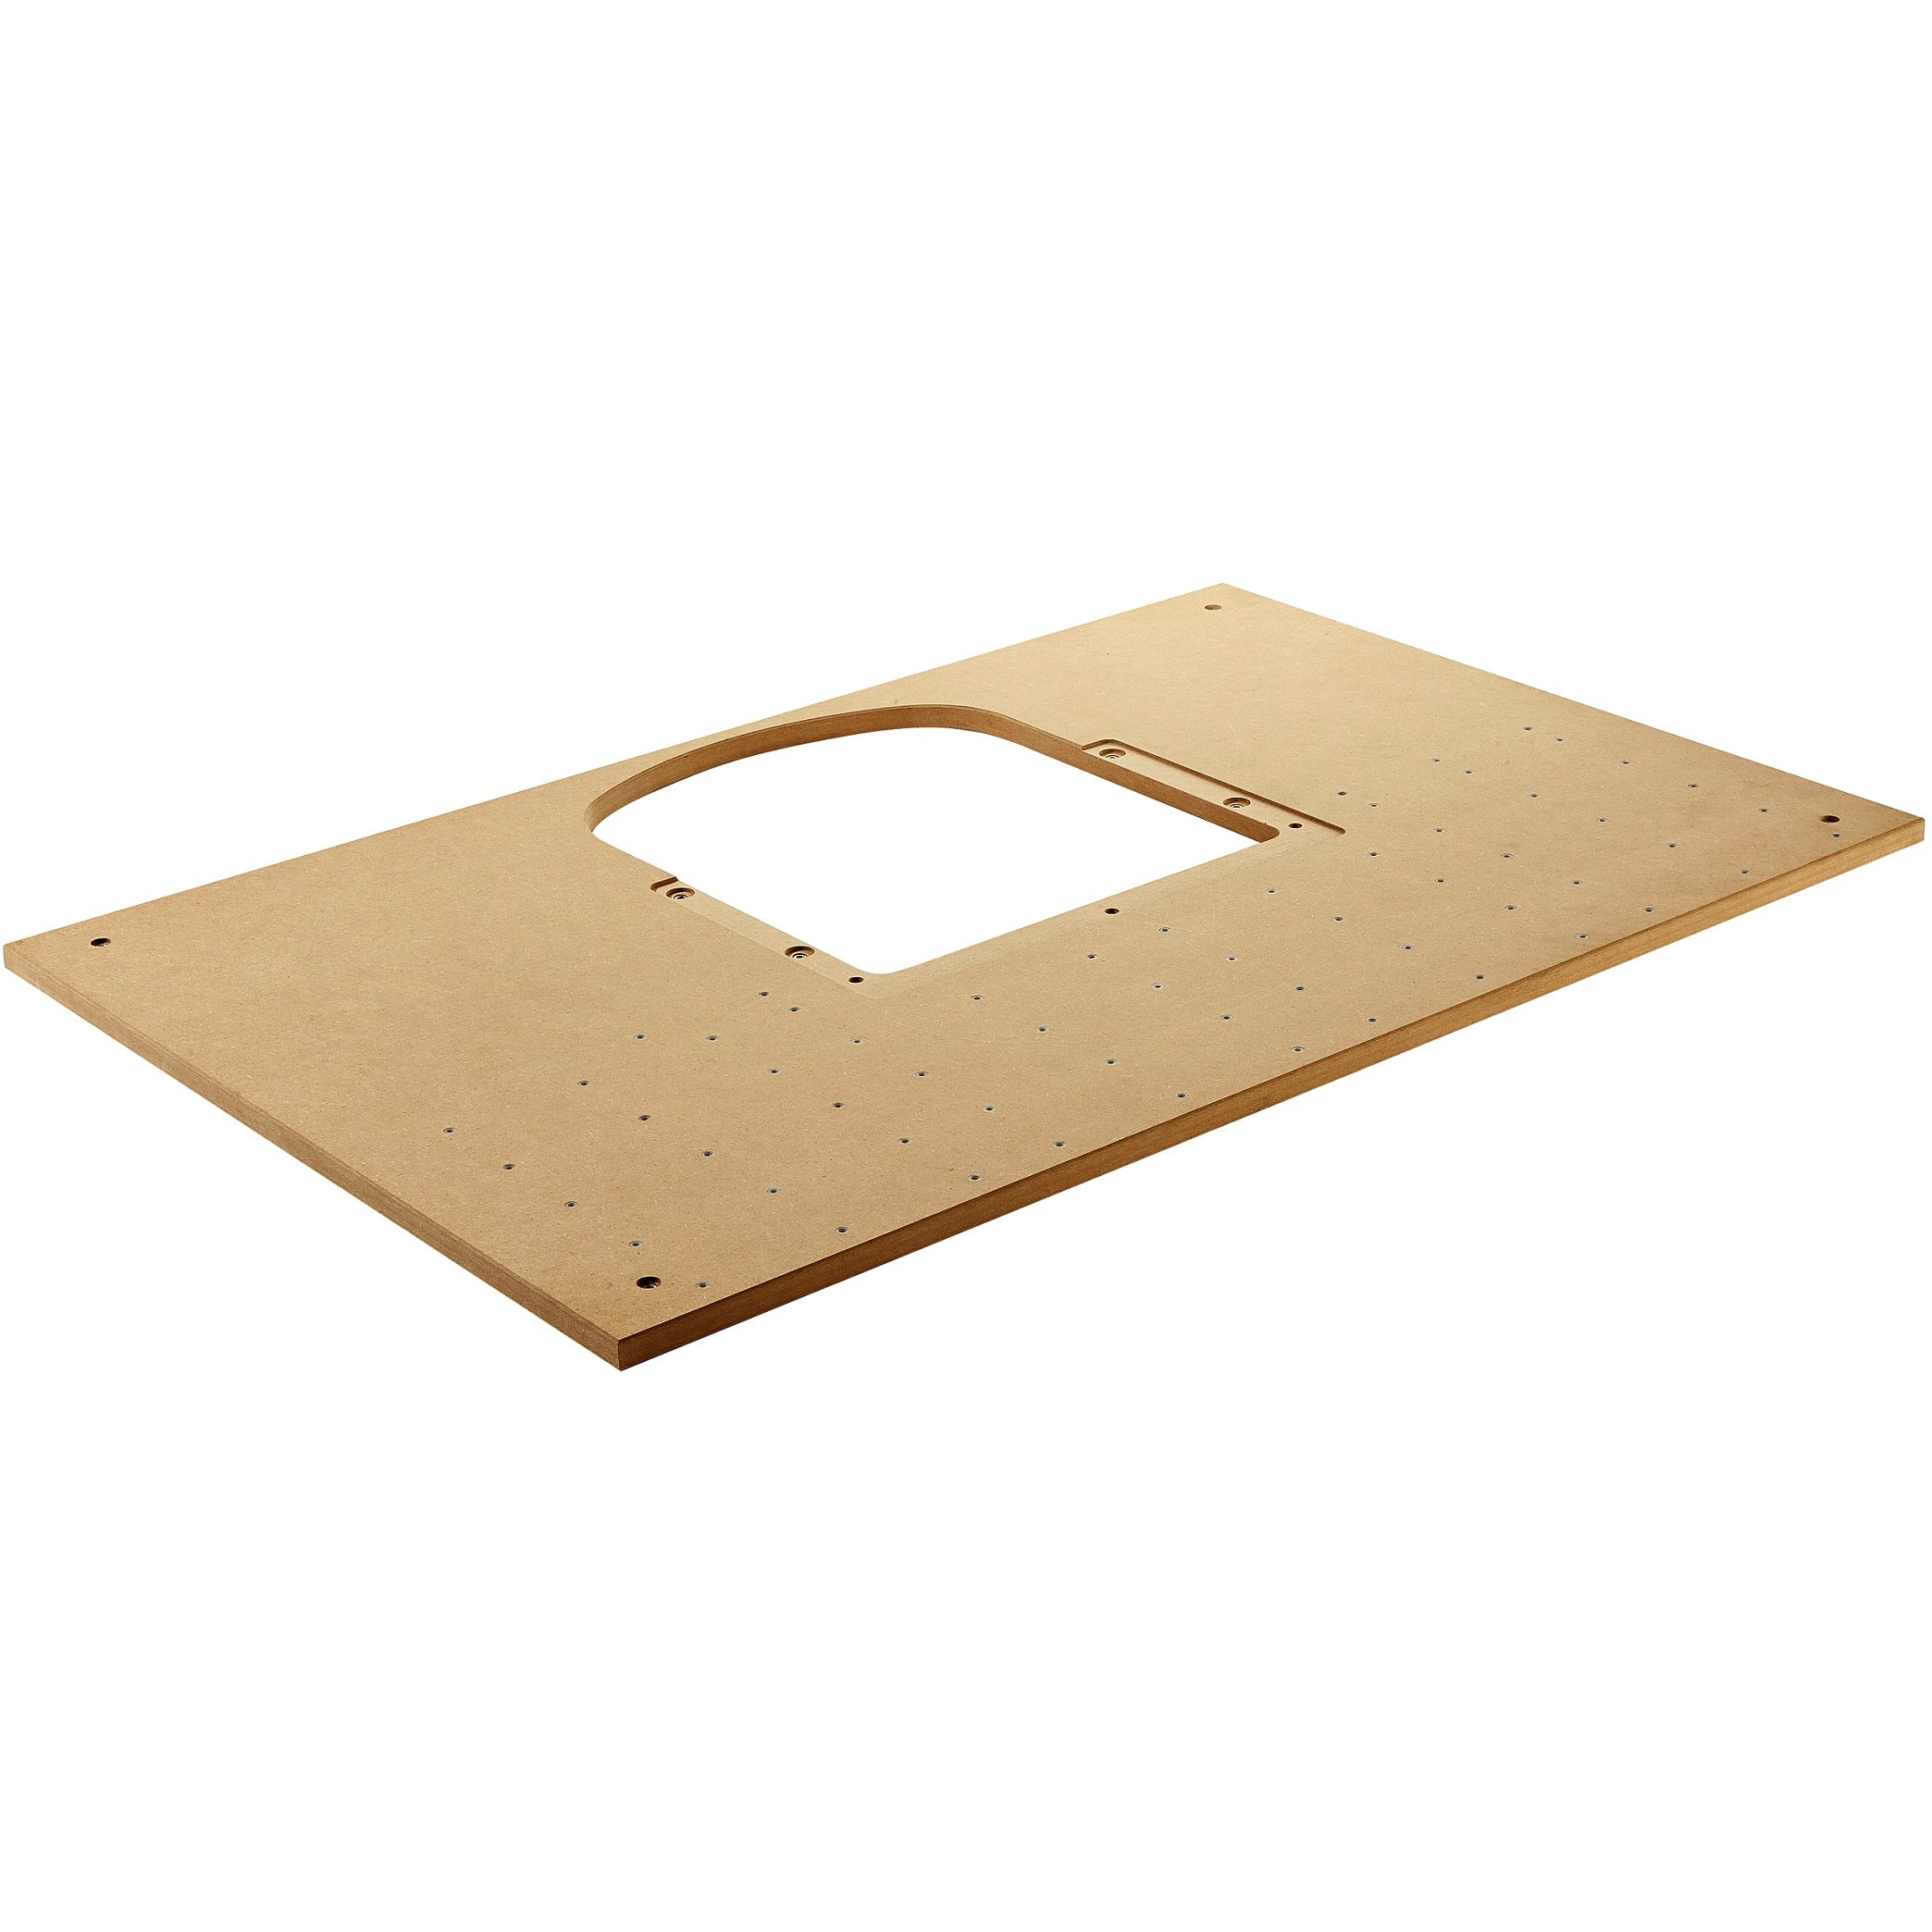 Festool 500366 MFT/3 Table Perforated Plate for CONTURO